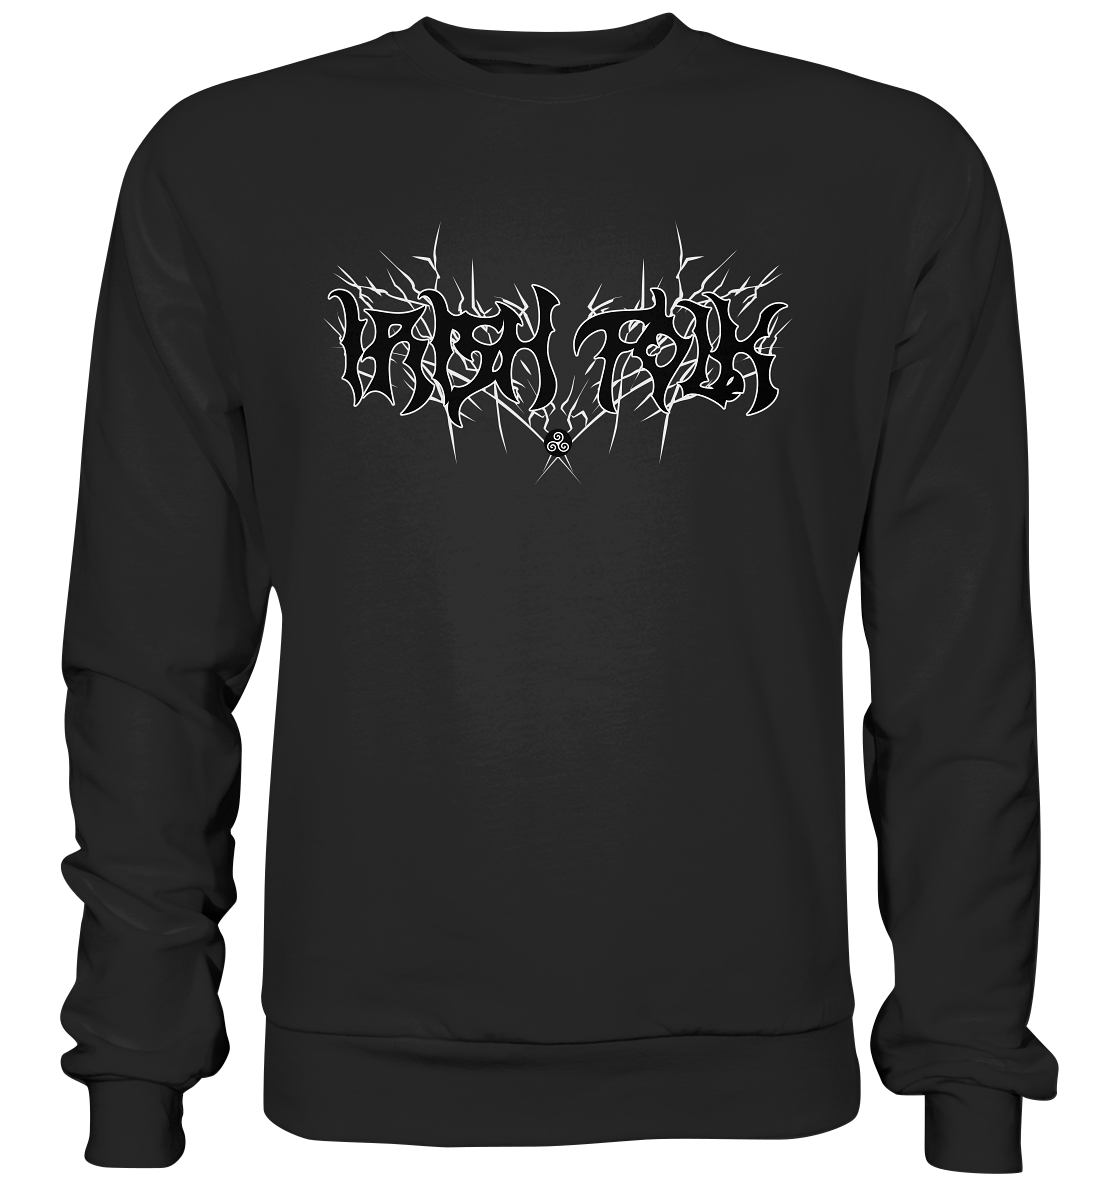 Irish Folk "Metal Band" - Premium Sweatshirt